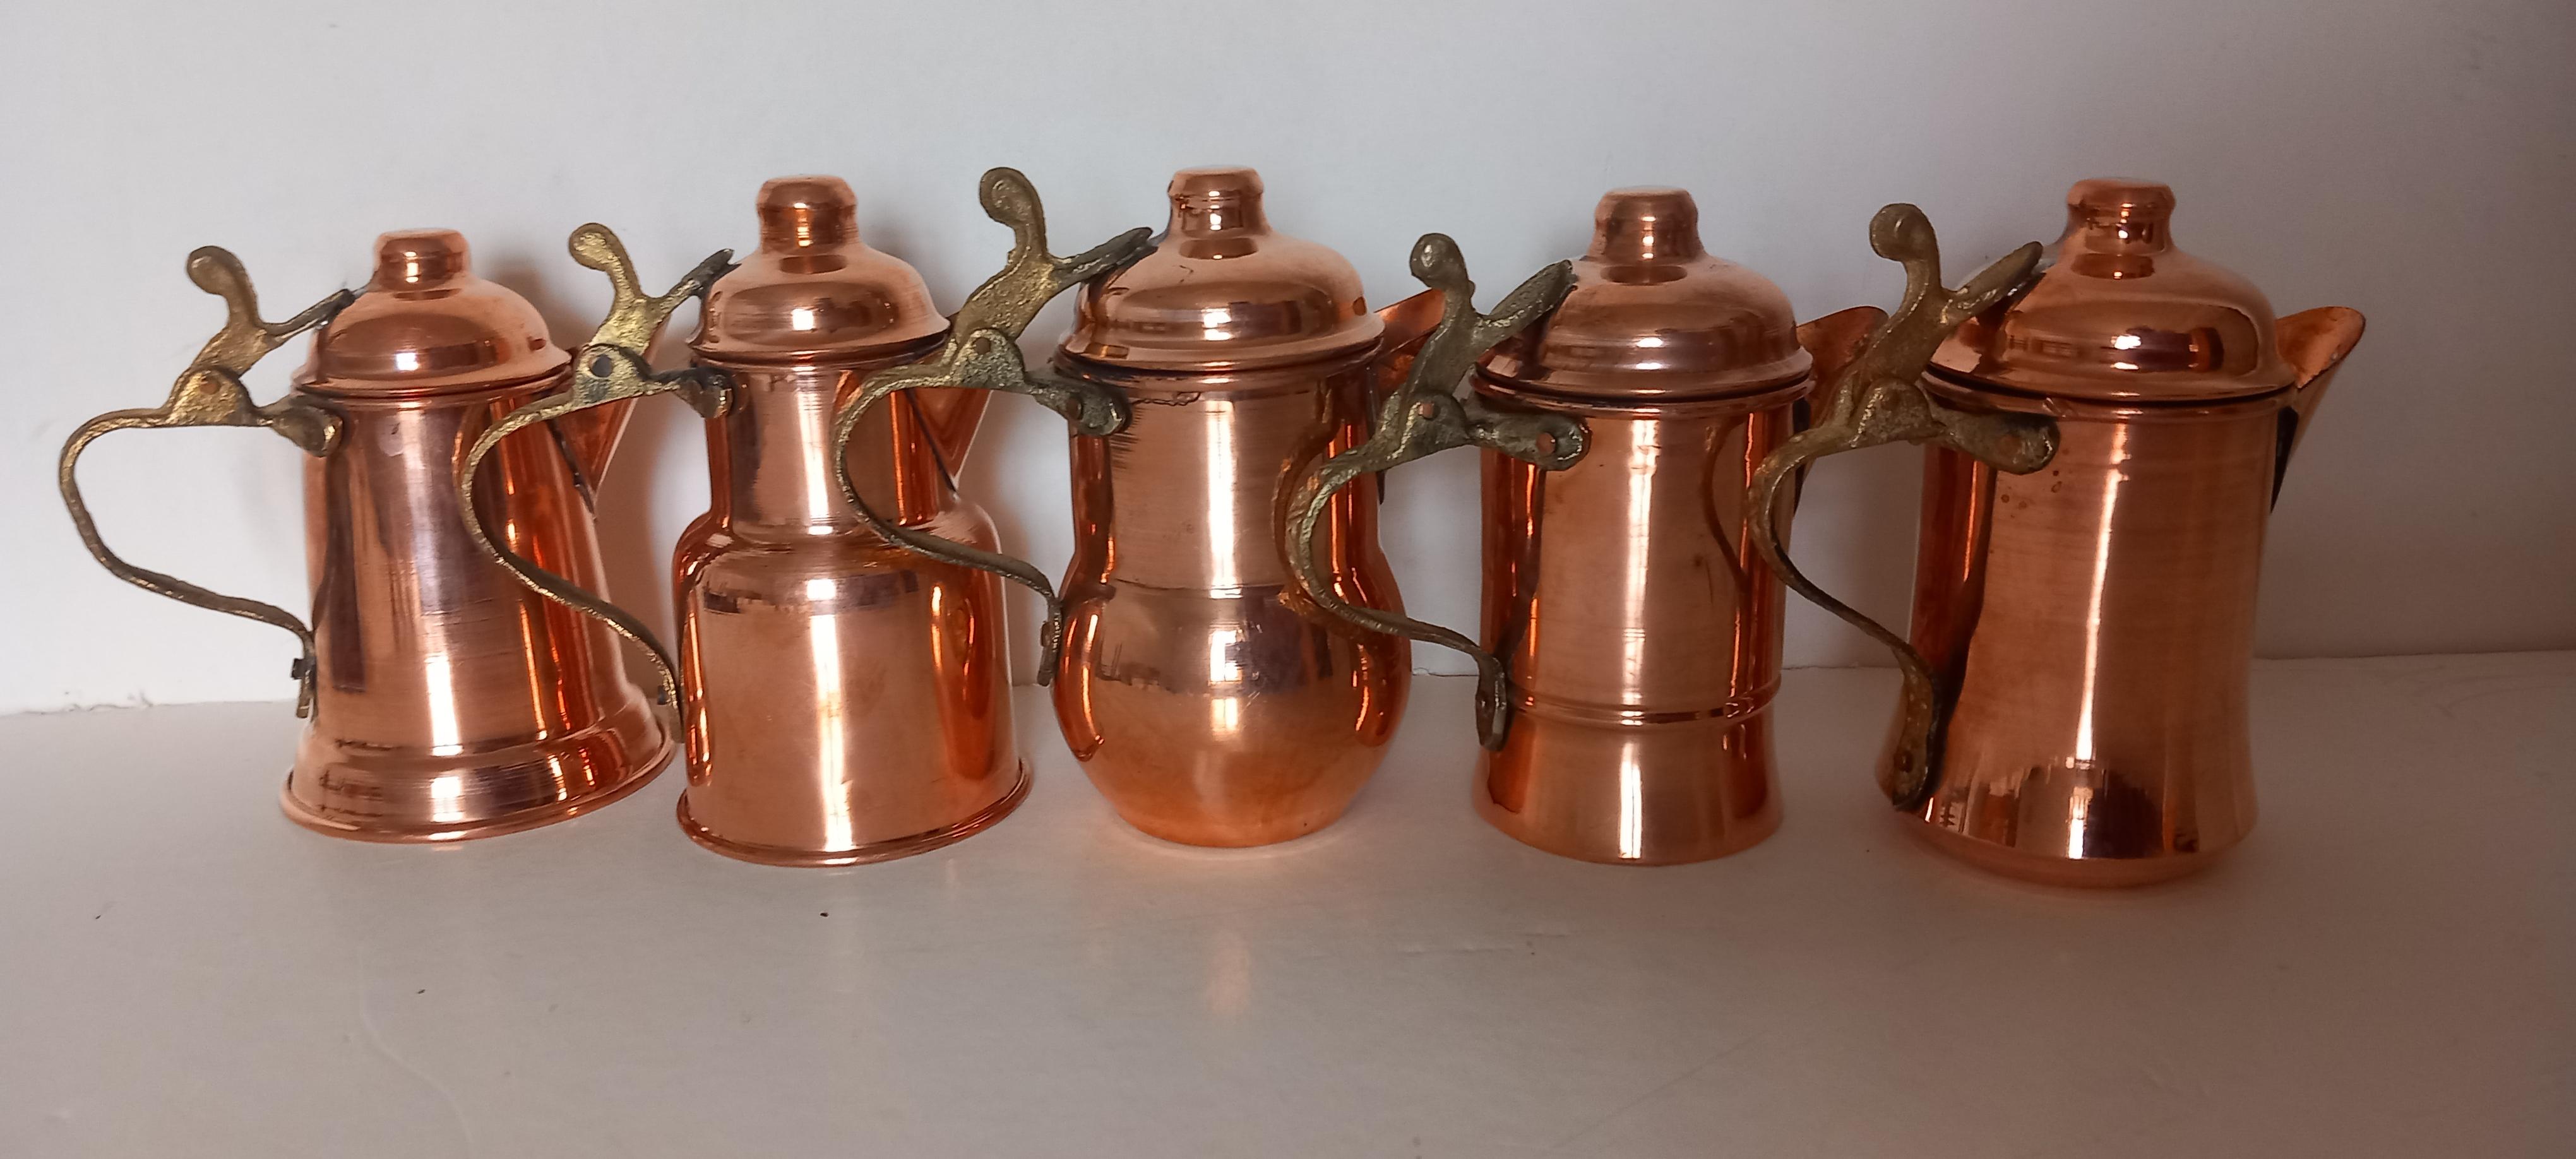  Copper Kitchen Decoration Vintage Coffee Pots Lot of 5 Diferent Design For Sale 14